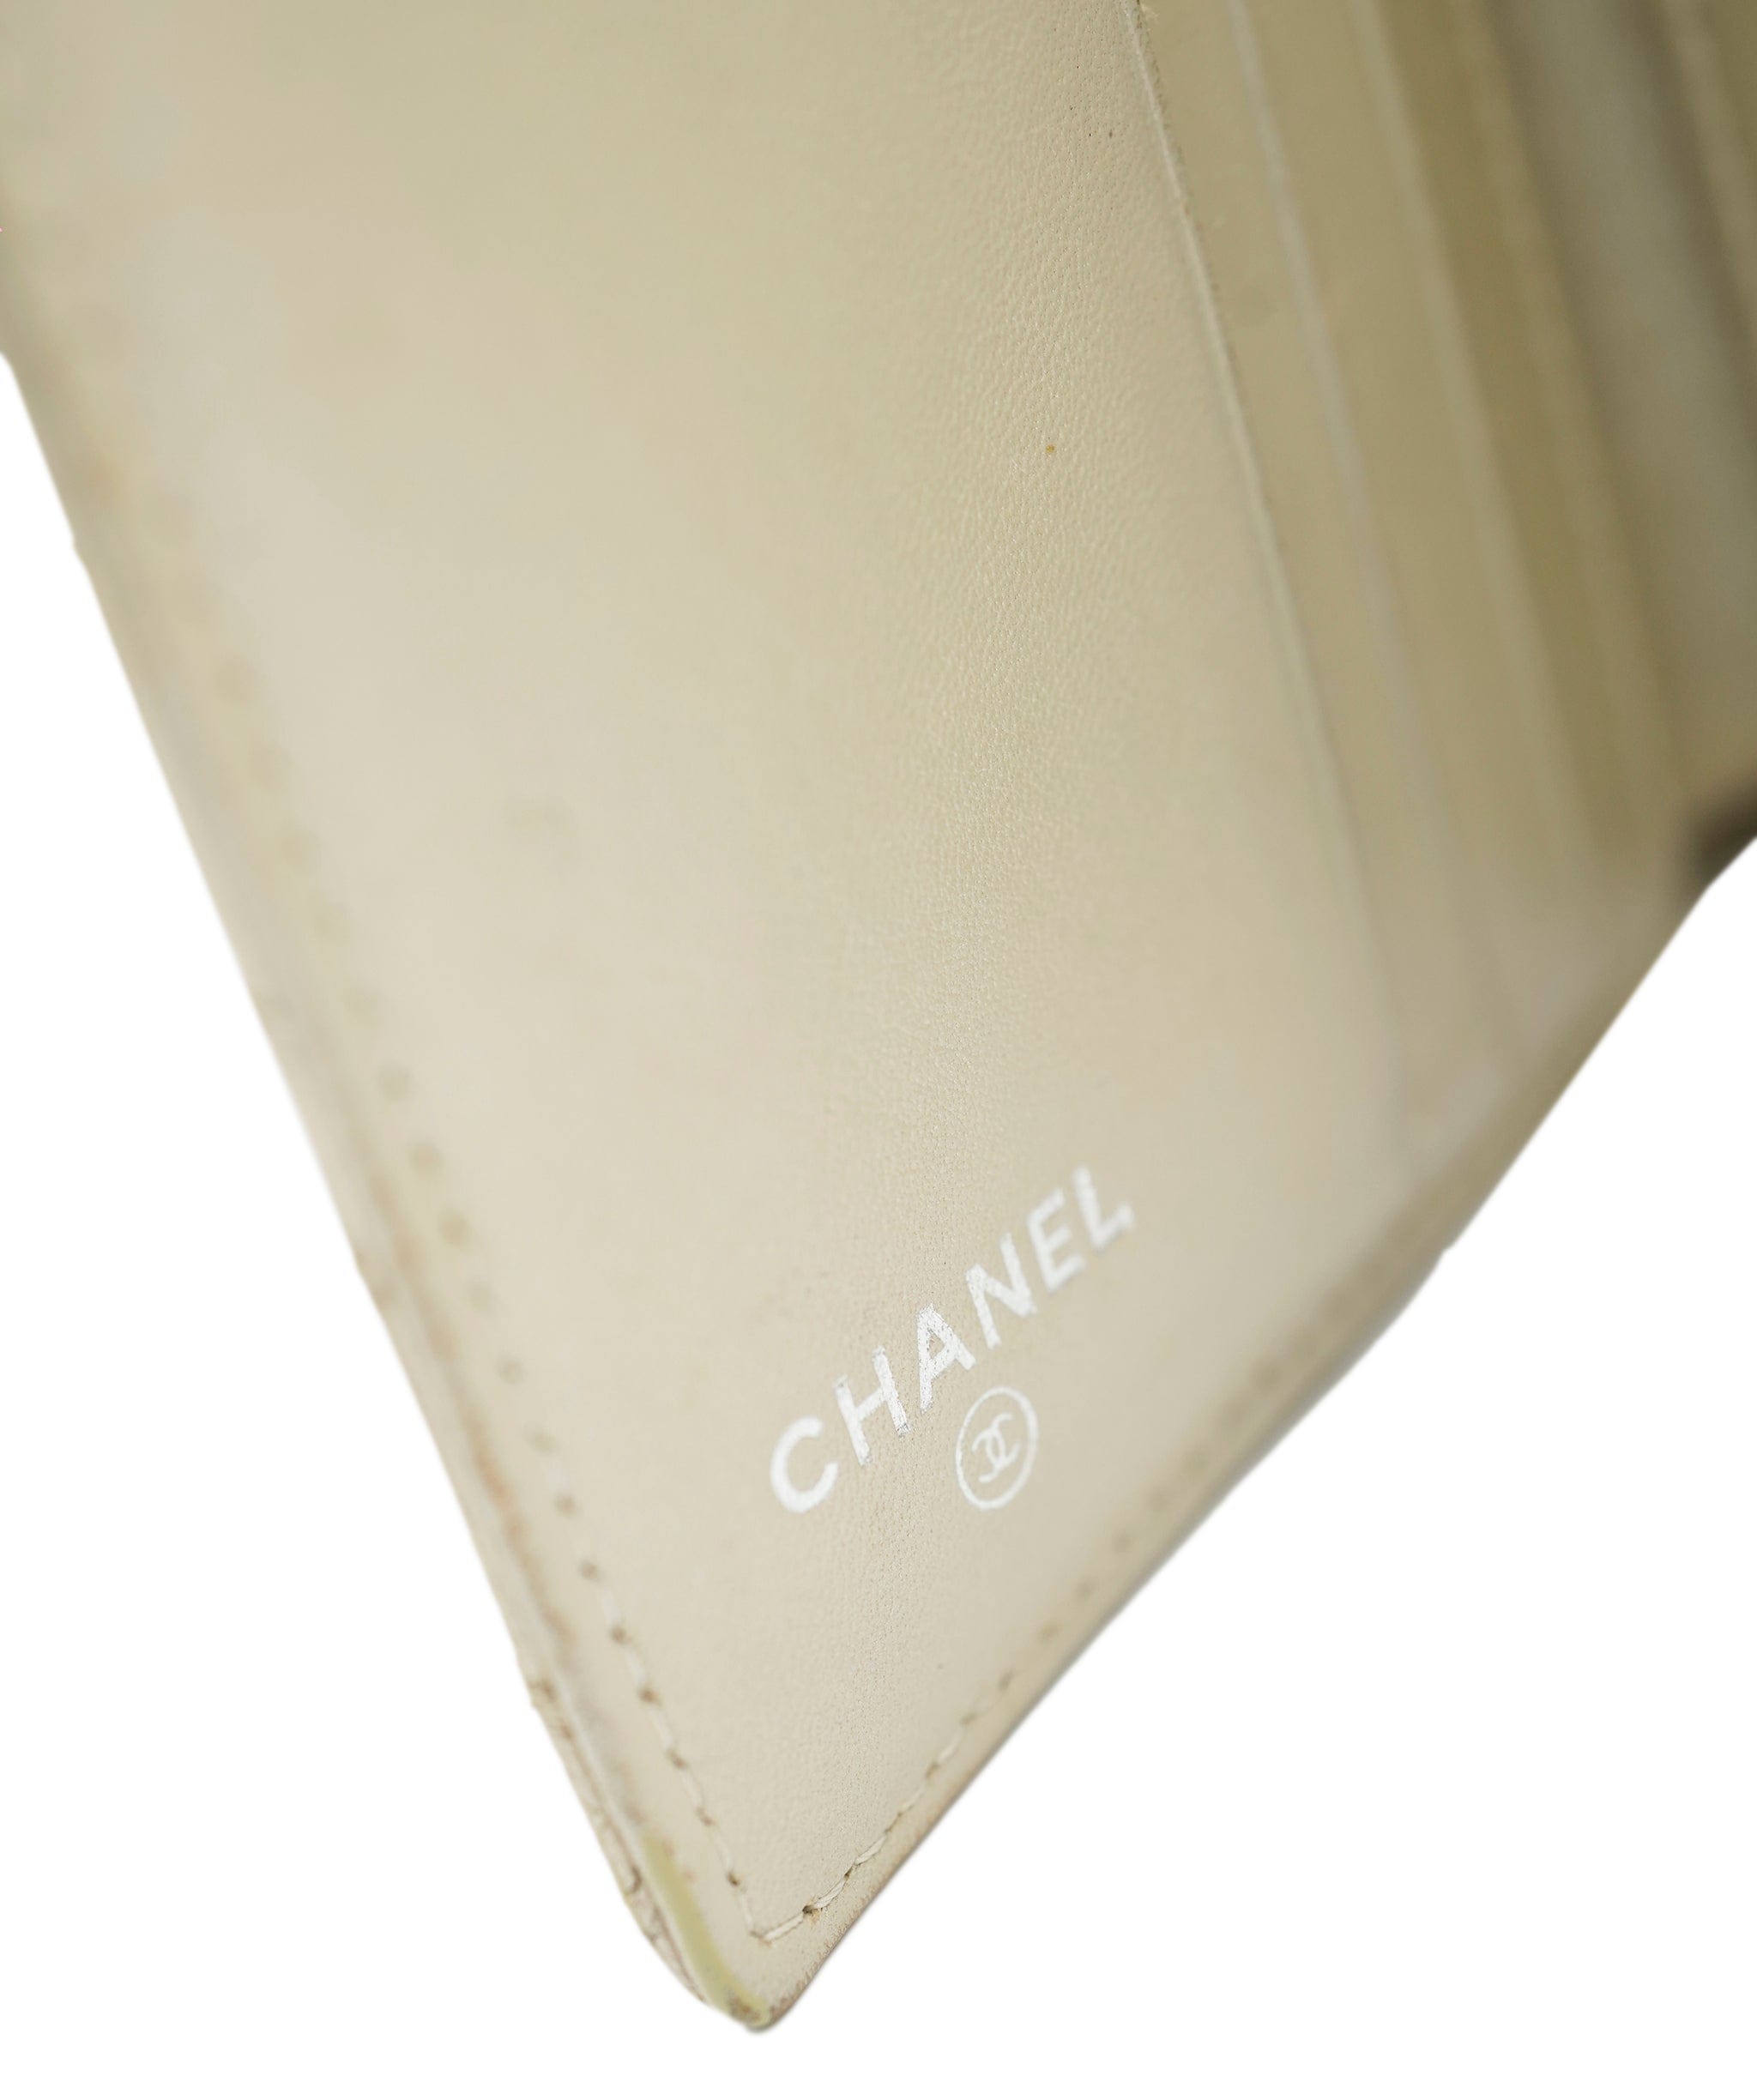 Chanel Chanel wallet ALC0577